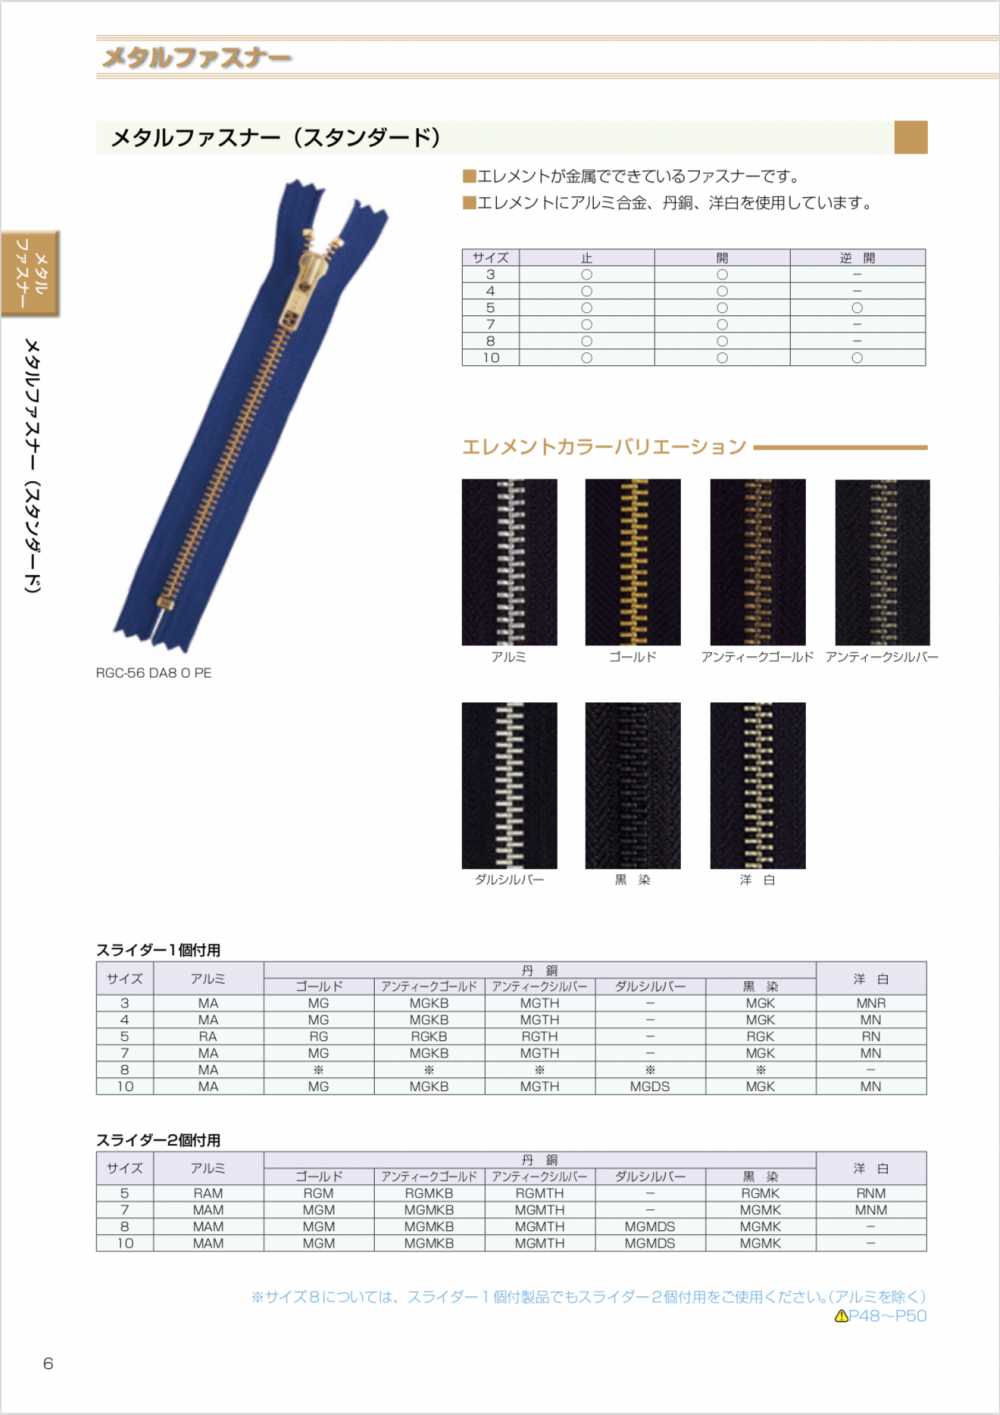 10MGMMR Metal Zipper /size 10/ Gold Two Way Separator YKK